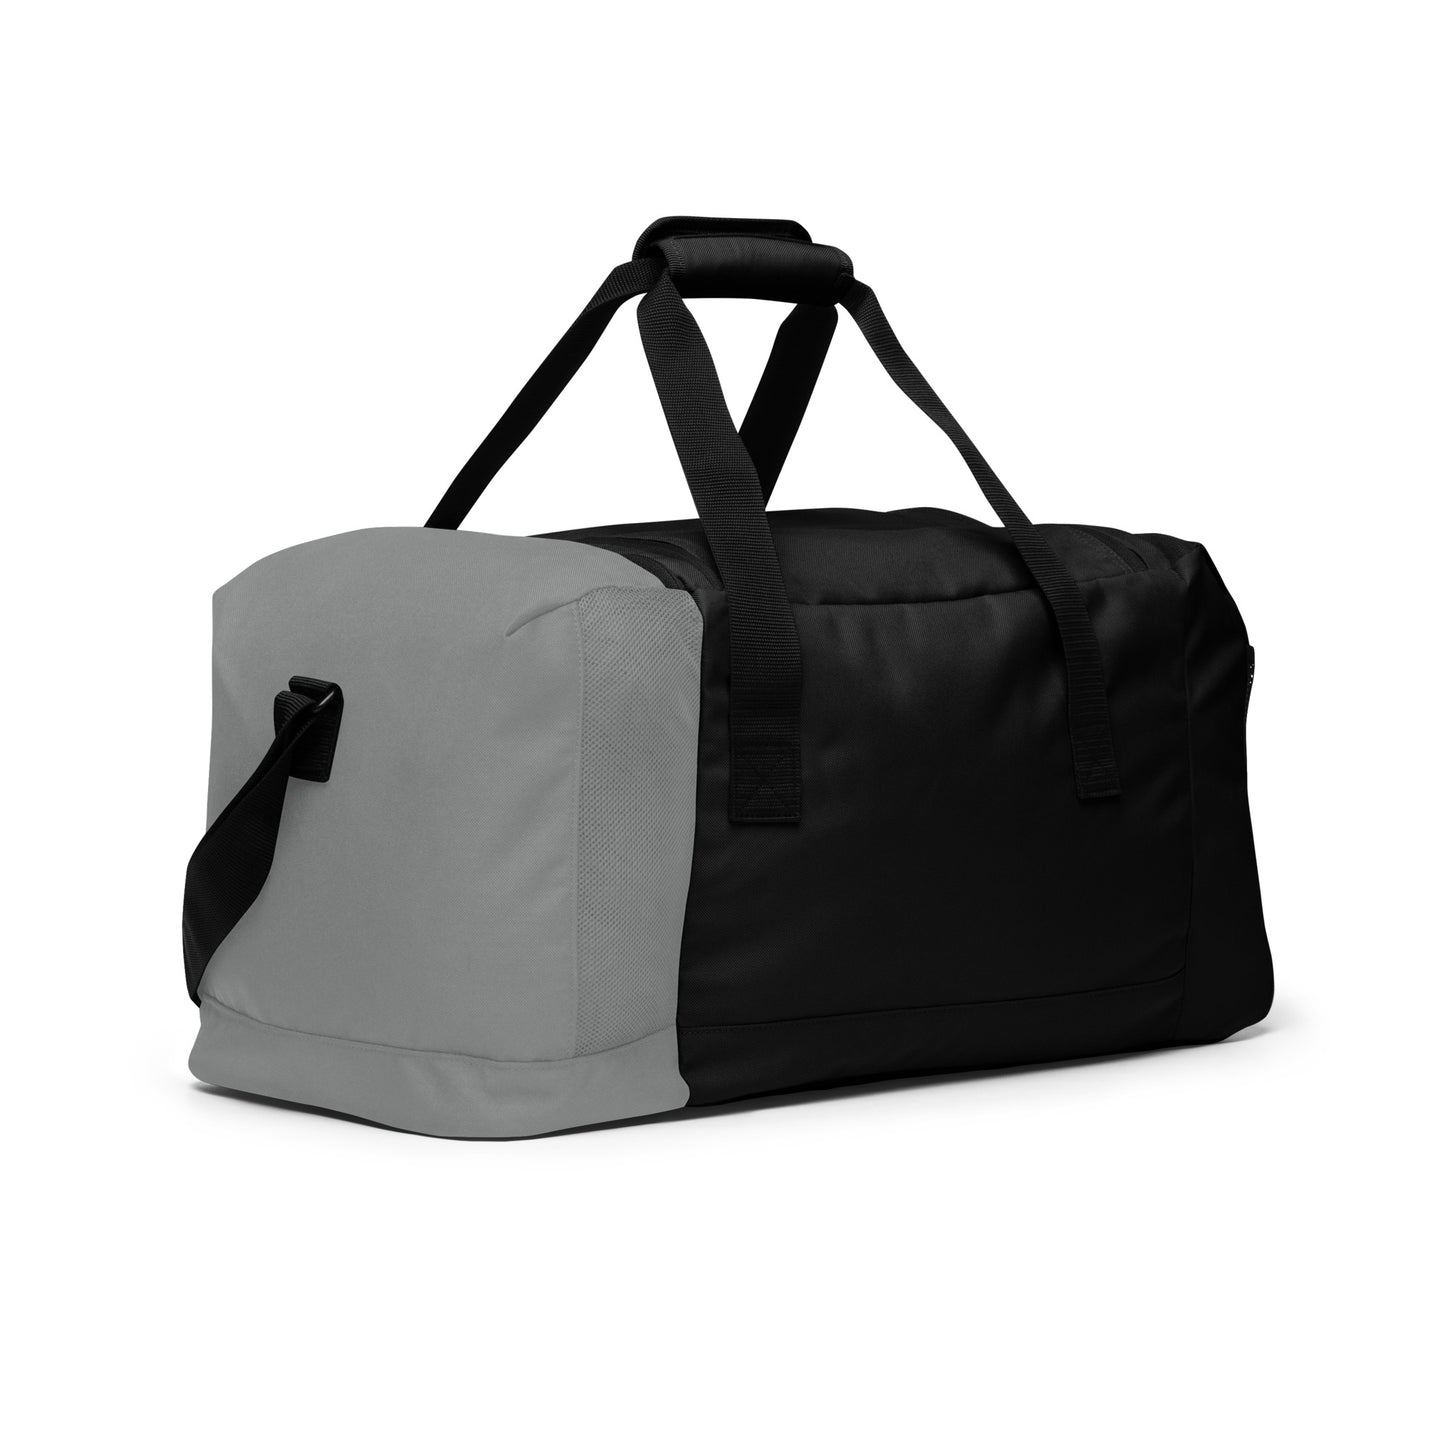 NYHC Adidas Duffle Bag